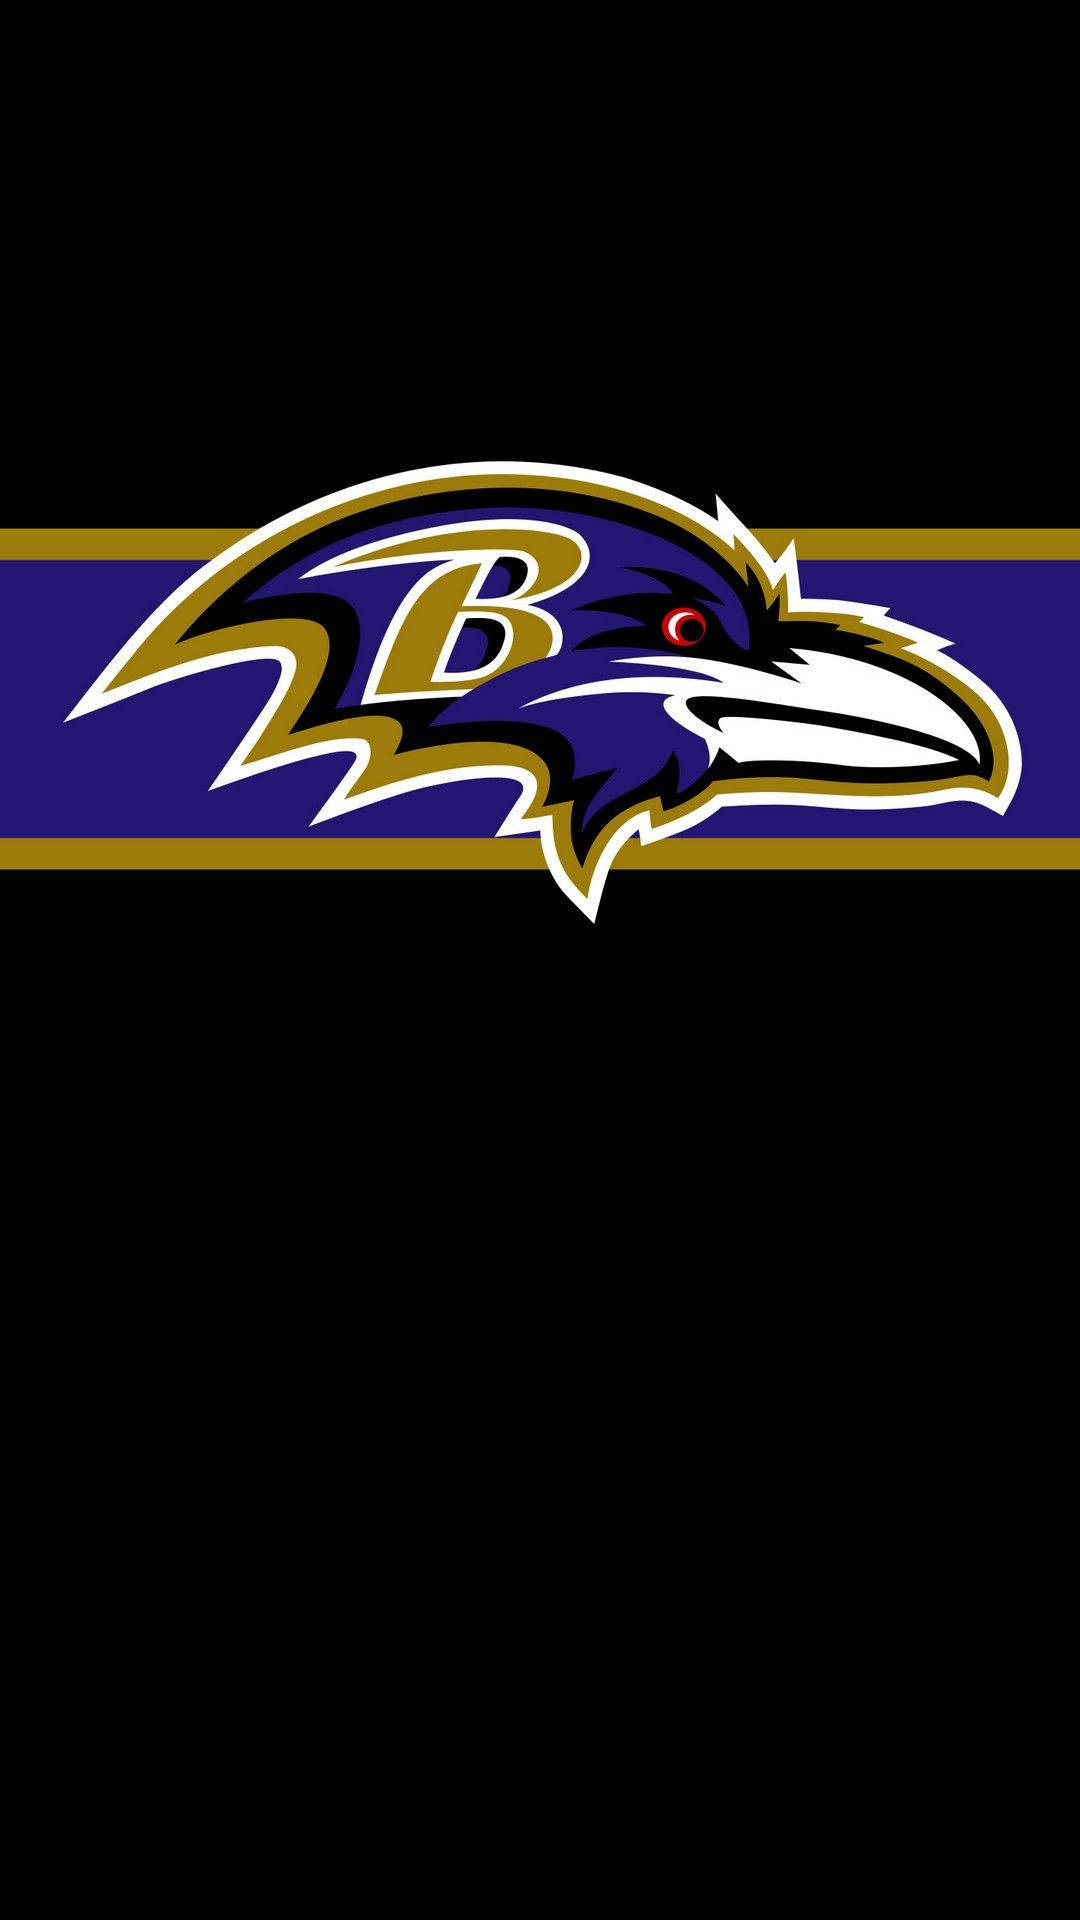 Fondode Pantalla Para Iphone Con El Sencillo Logo De Los Baltimore Ravens Fondo de pantalla